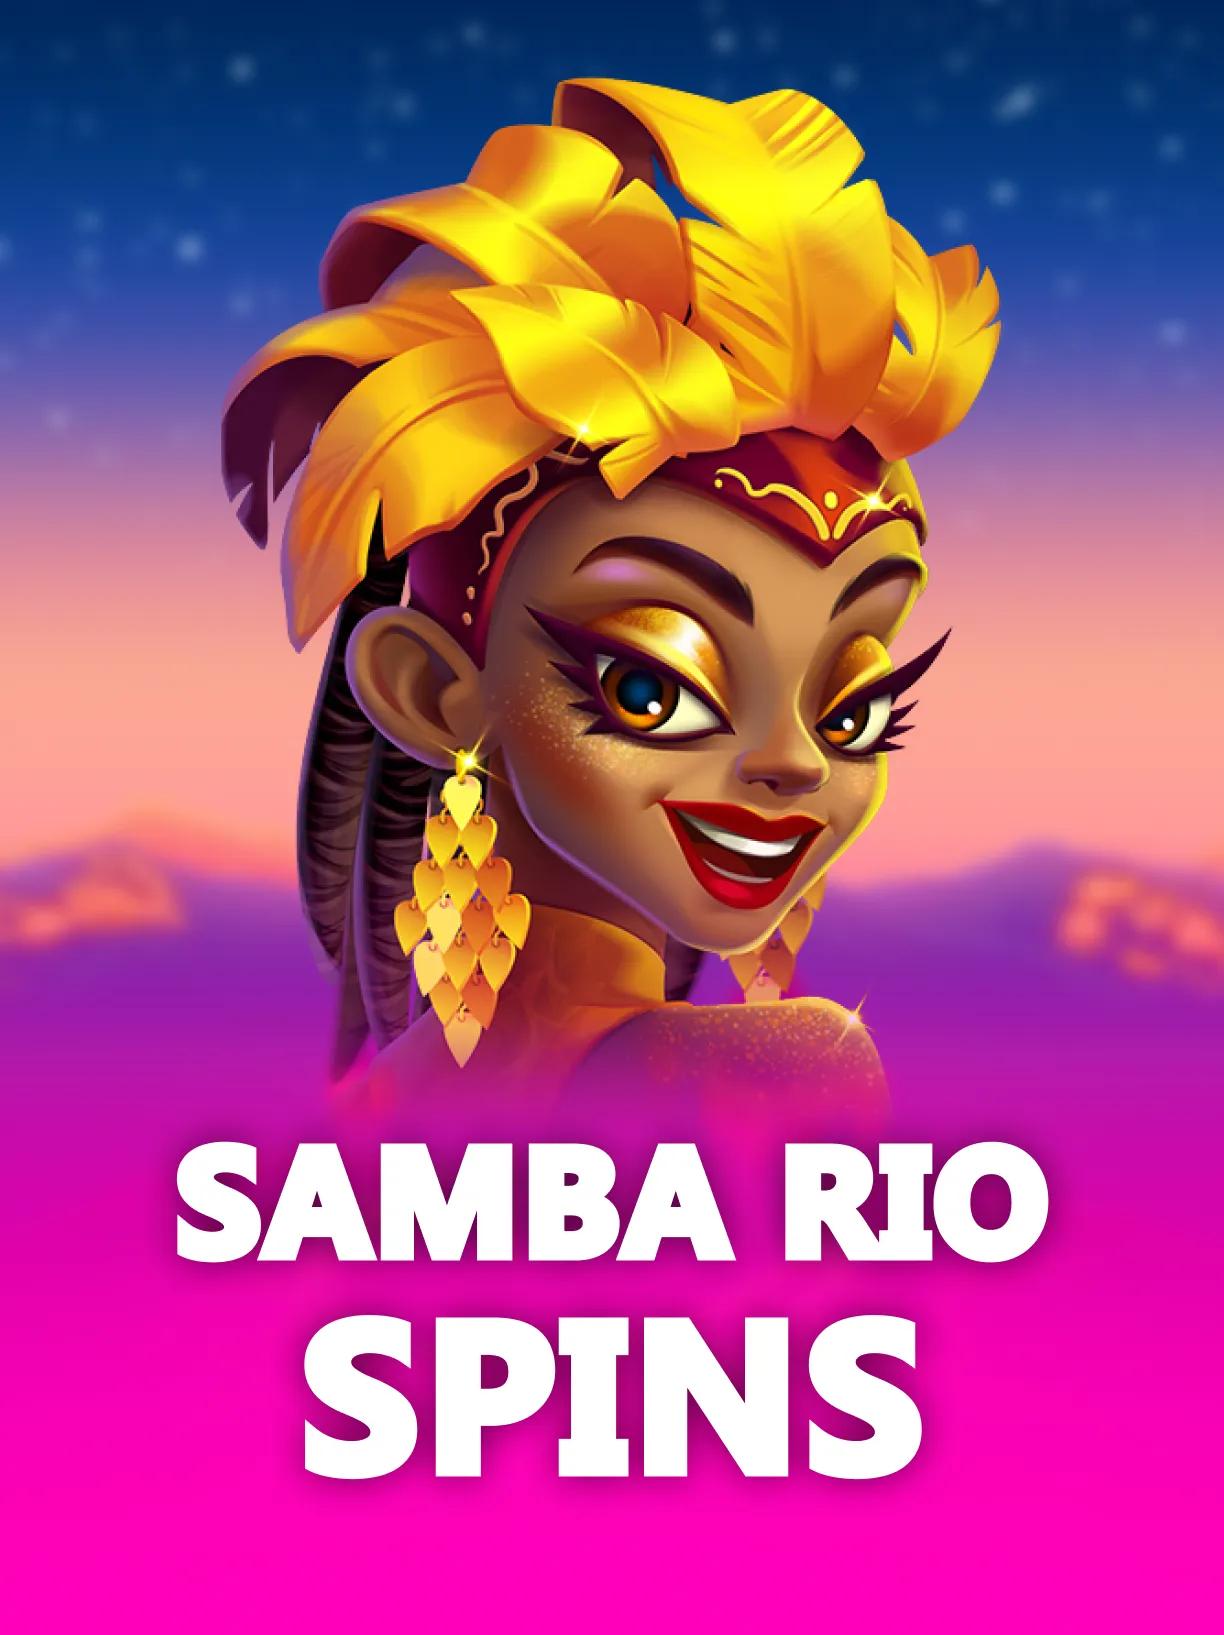 dl-Samba-Rio-Spins-square.webp